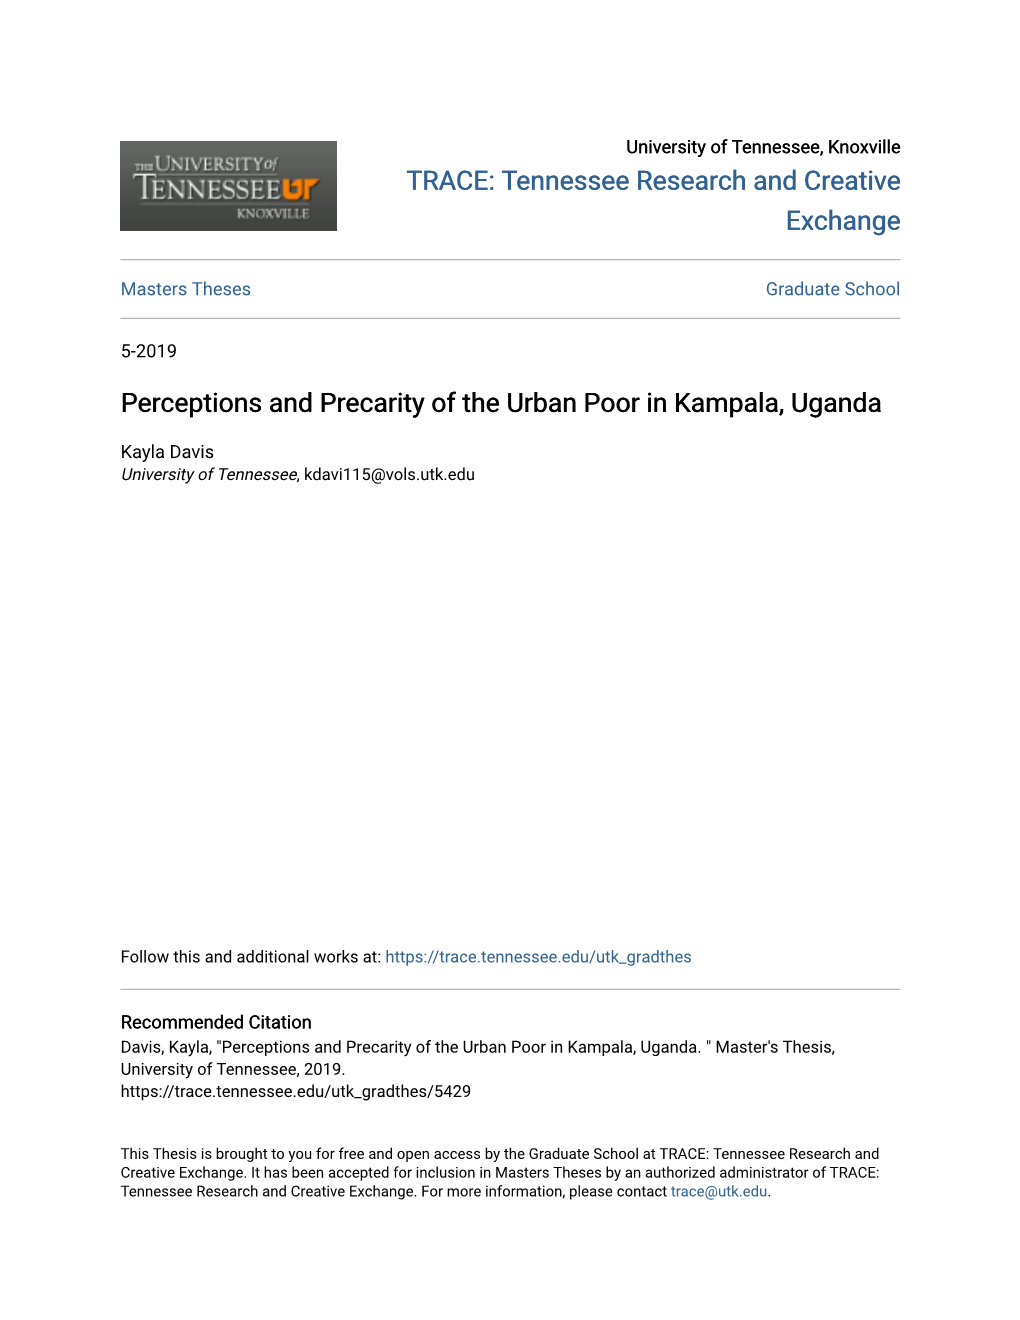 Perceptions and Precarity of the Urban Poor in Kampala, Uganda